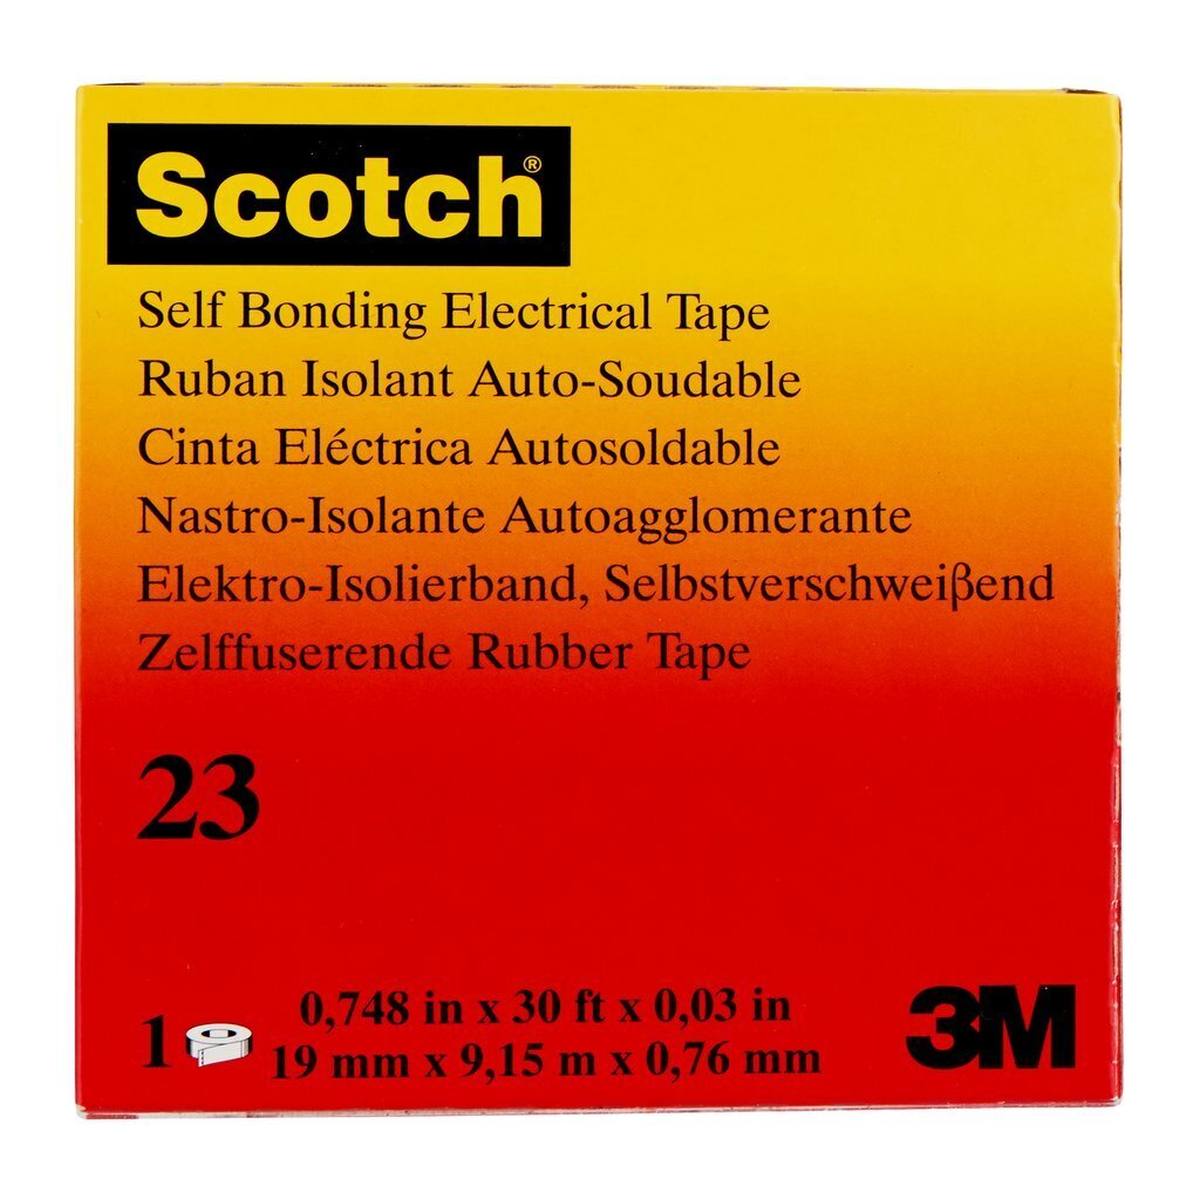 3M Scotch 23 Cinta autosellante de etileno-propileno-caucho, 19 mm x 9,15 m